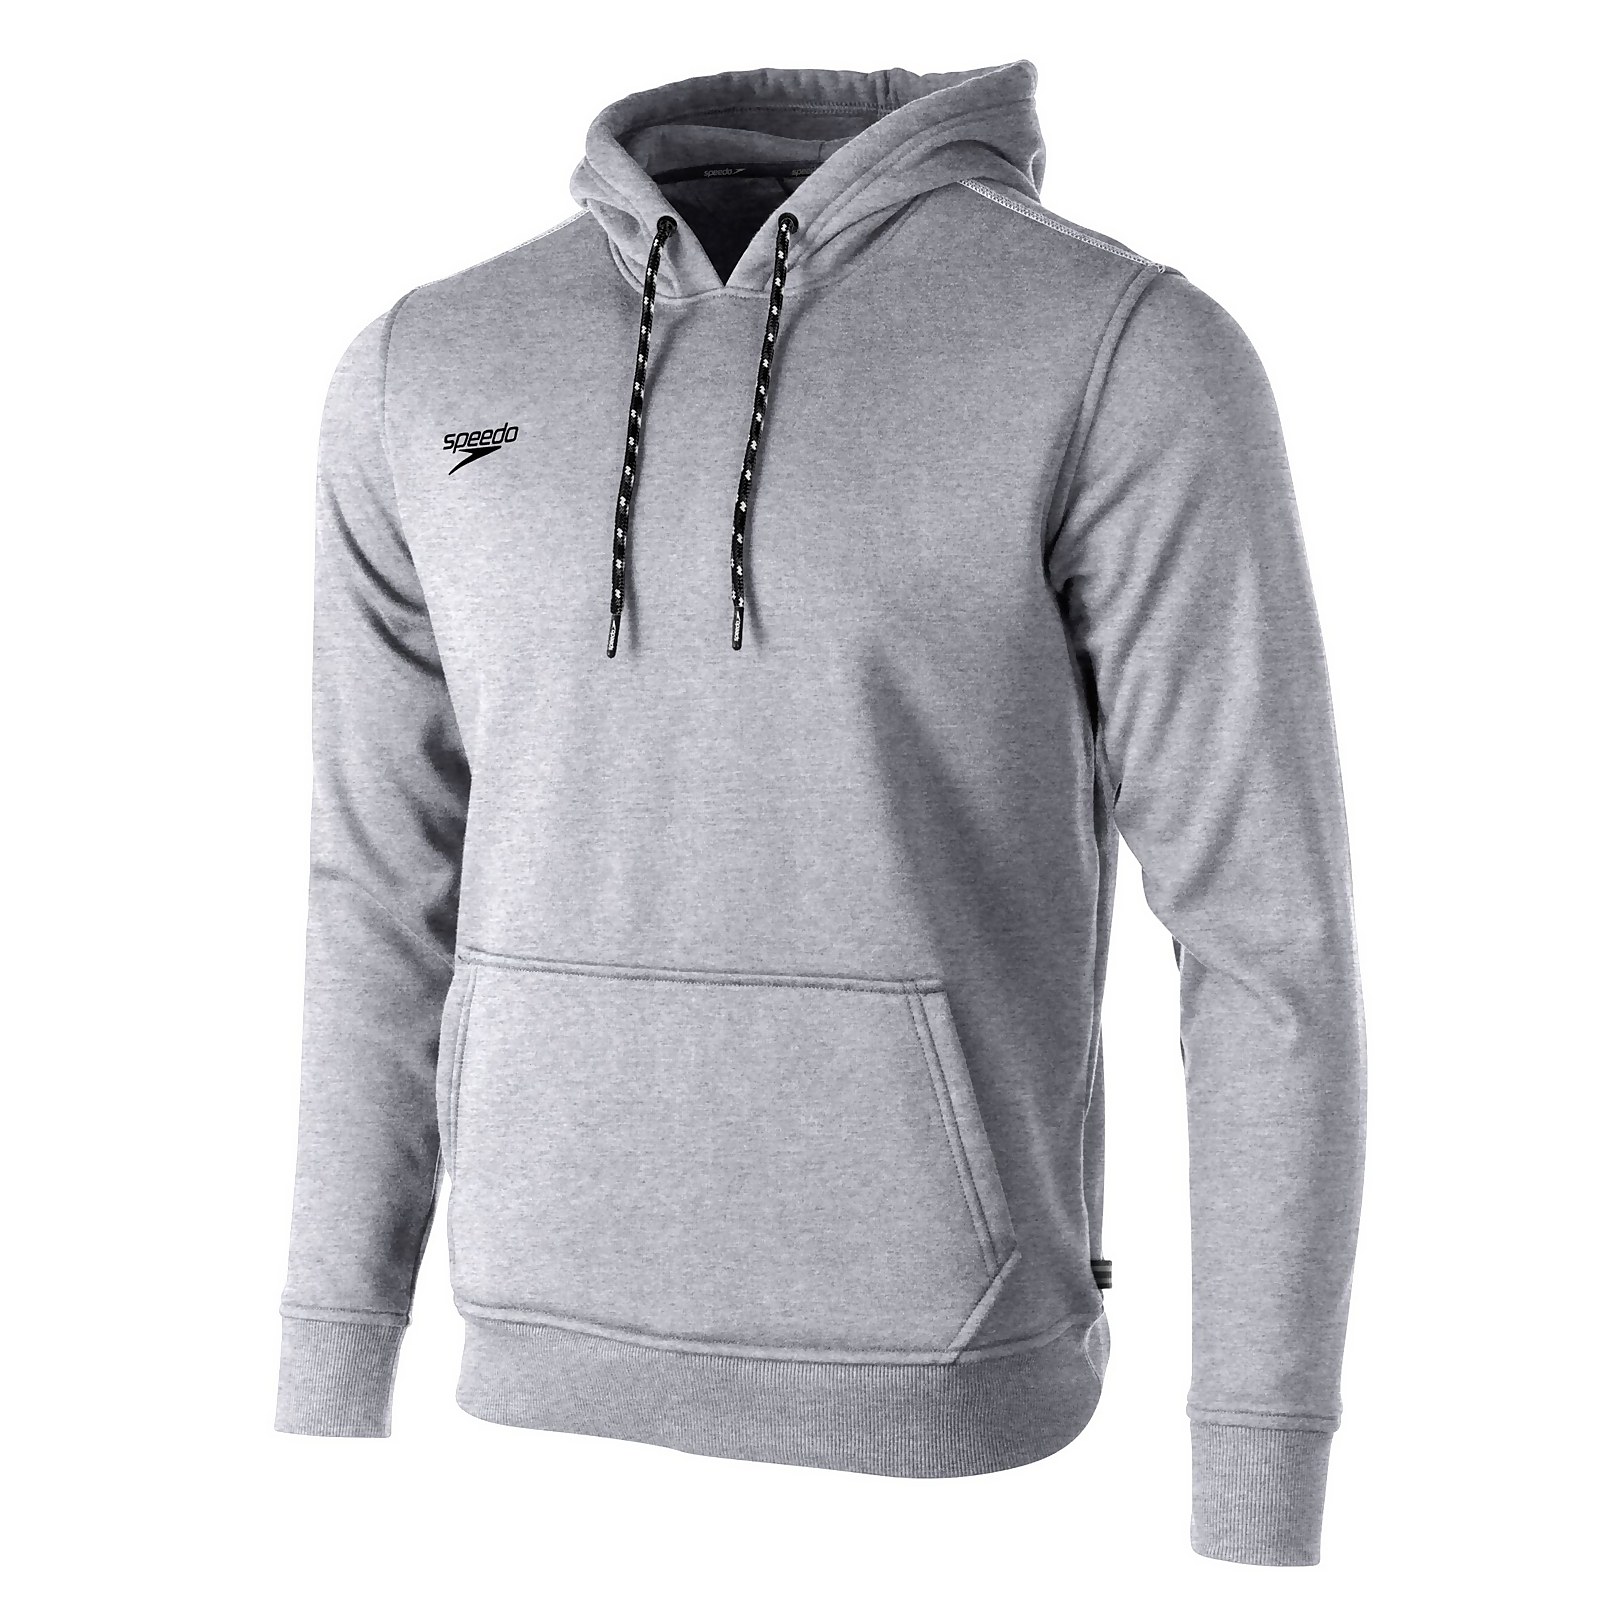 Speedo  Long Sleeve Hooded Sweatshirt - L    : Gray (13243626 5059937084466) photo